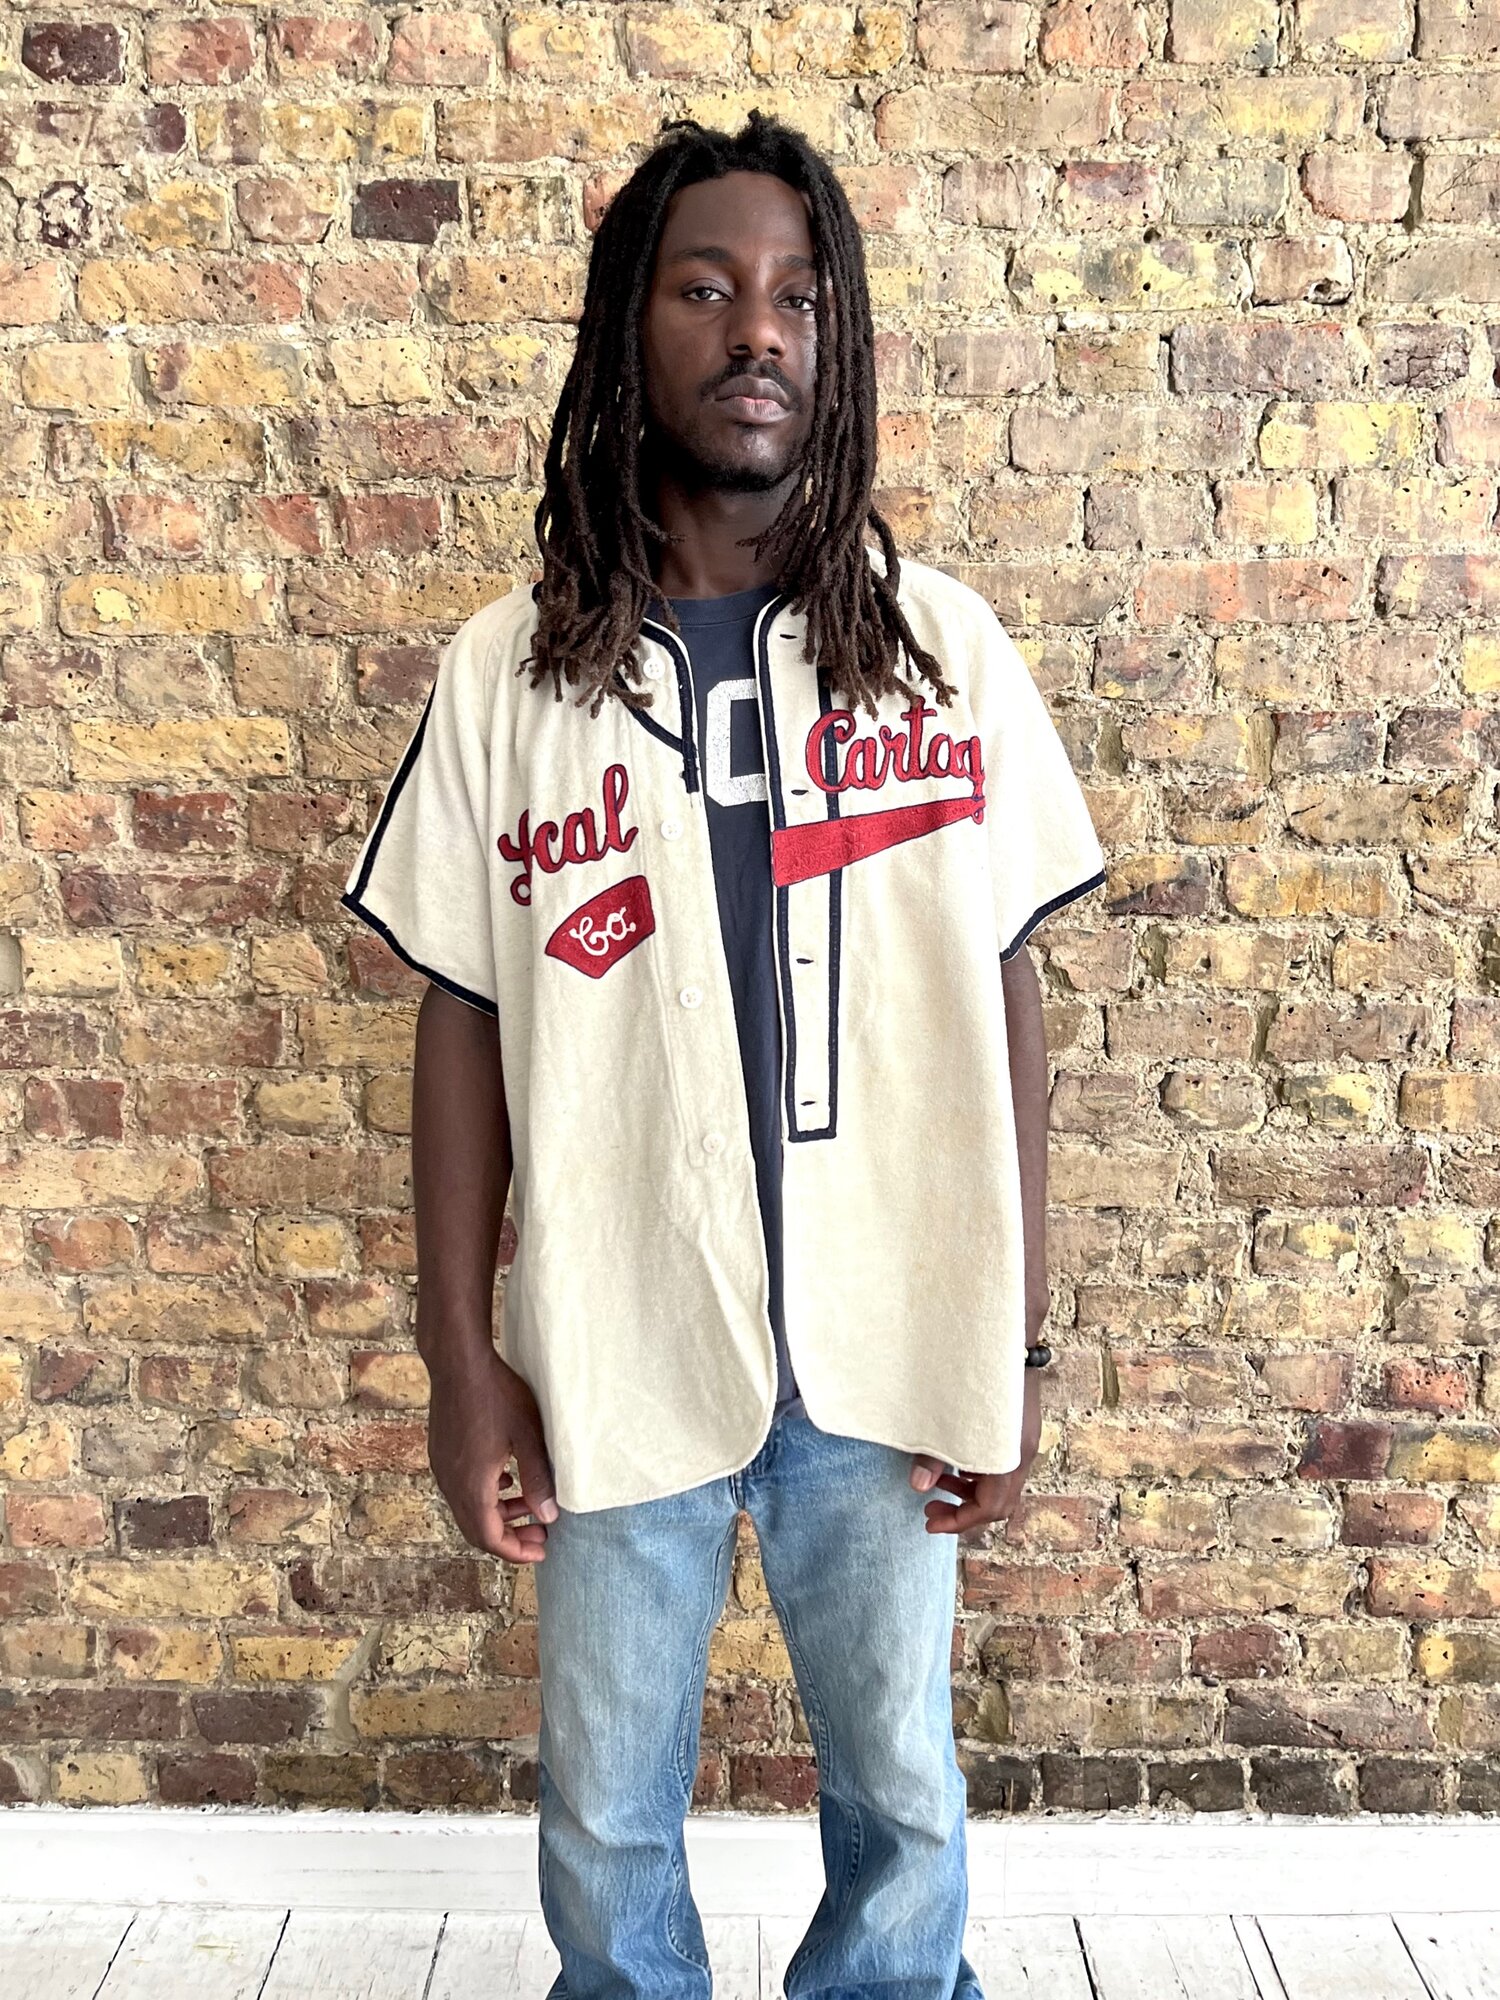 90s baseball jersey outfits